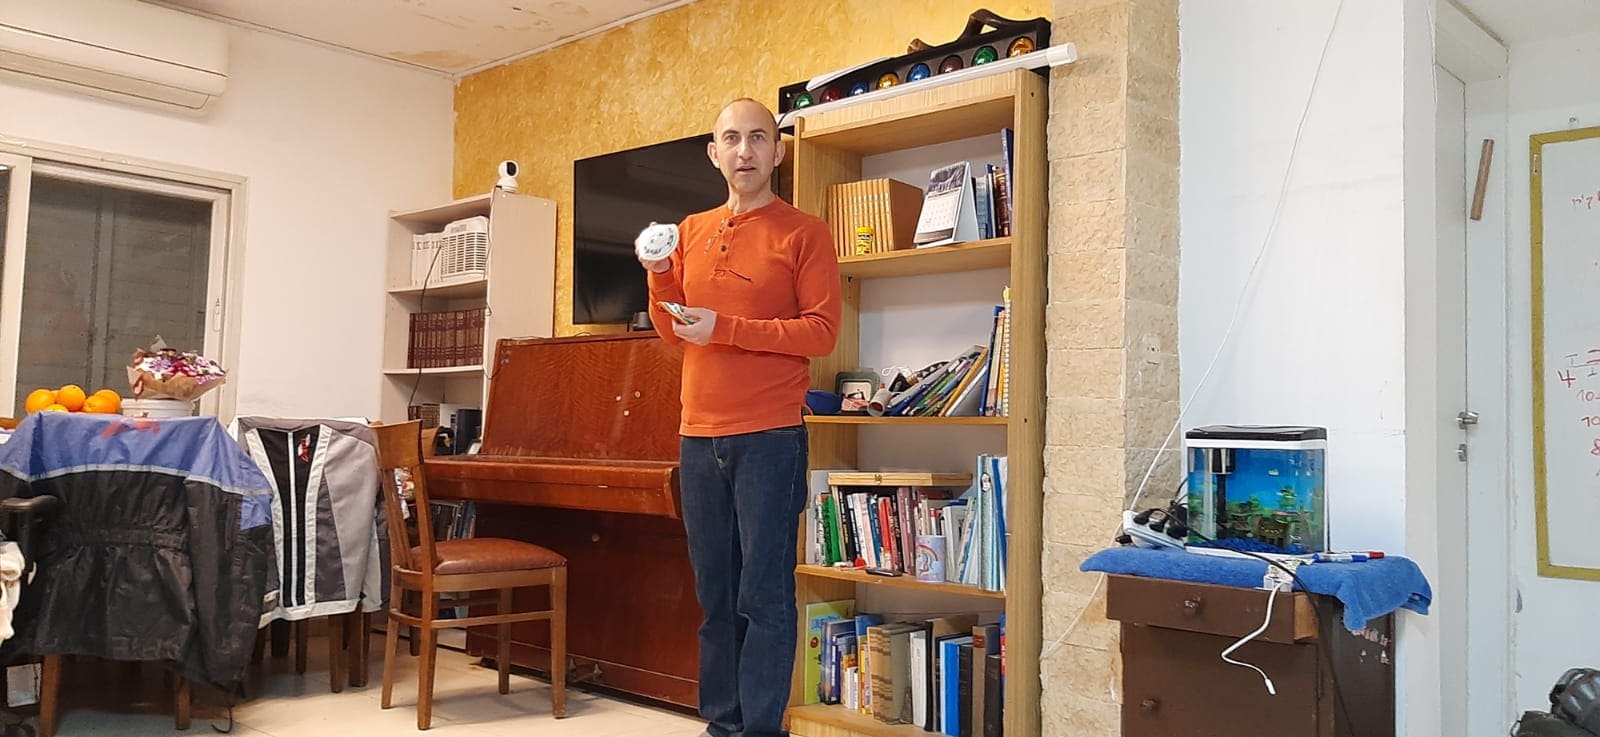 &quot;סבלתי מיהדות שמדירה אותי&quot;. הרב איתן קרול בביתו בשכונת עזרא בדרום תל אביב (צילום: עומר שרביט)